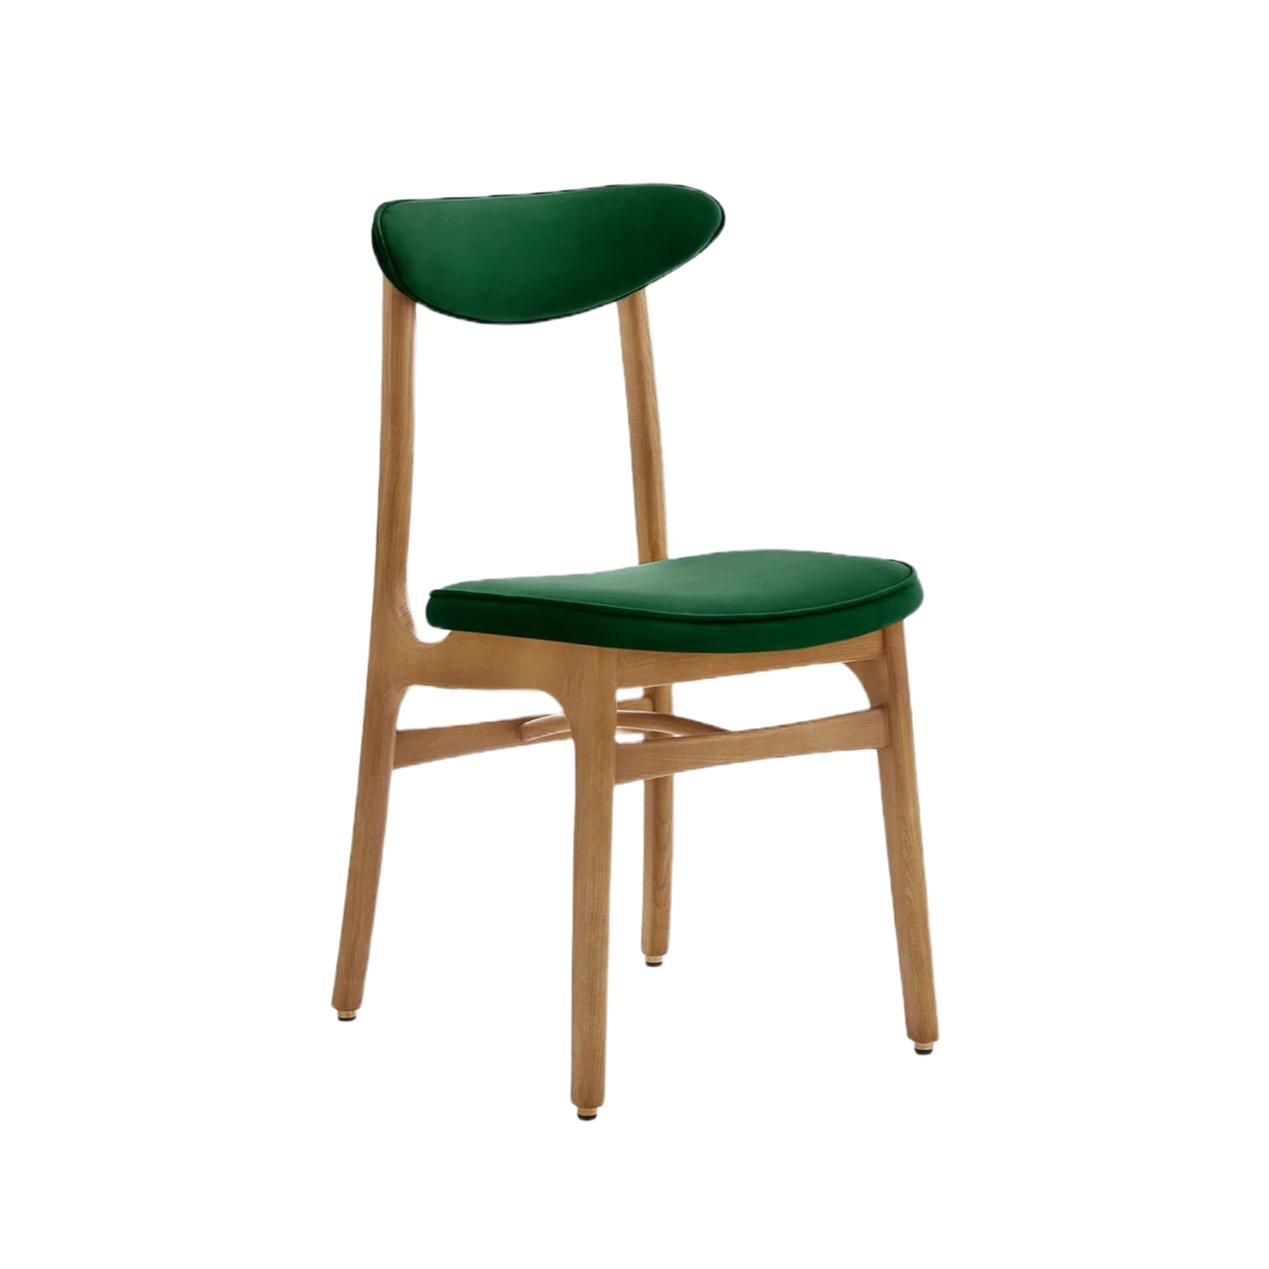 Krzesło 200-190 zielony w tkaninie Velvet Bottle Green 366 concept    Eye on Design